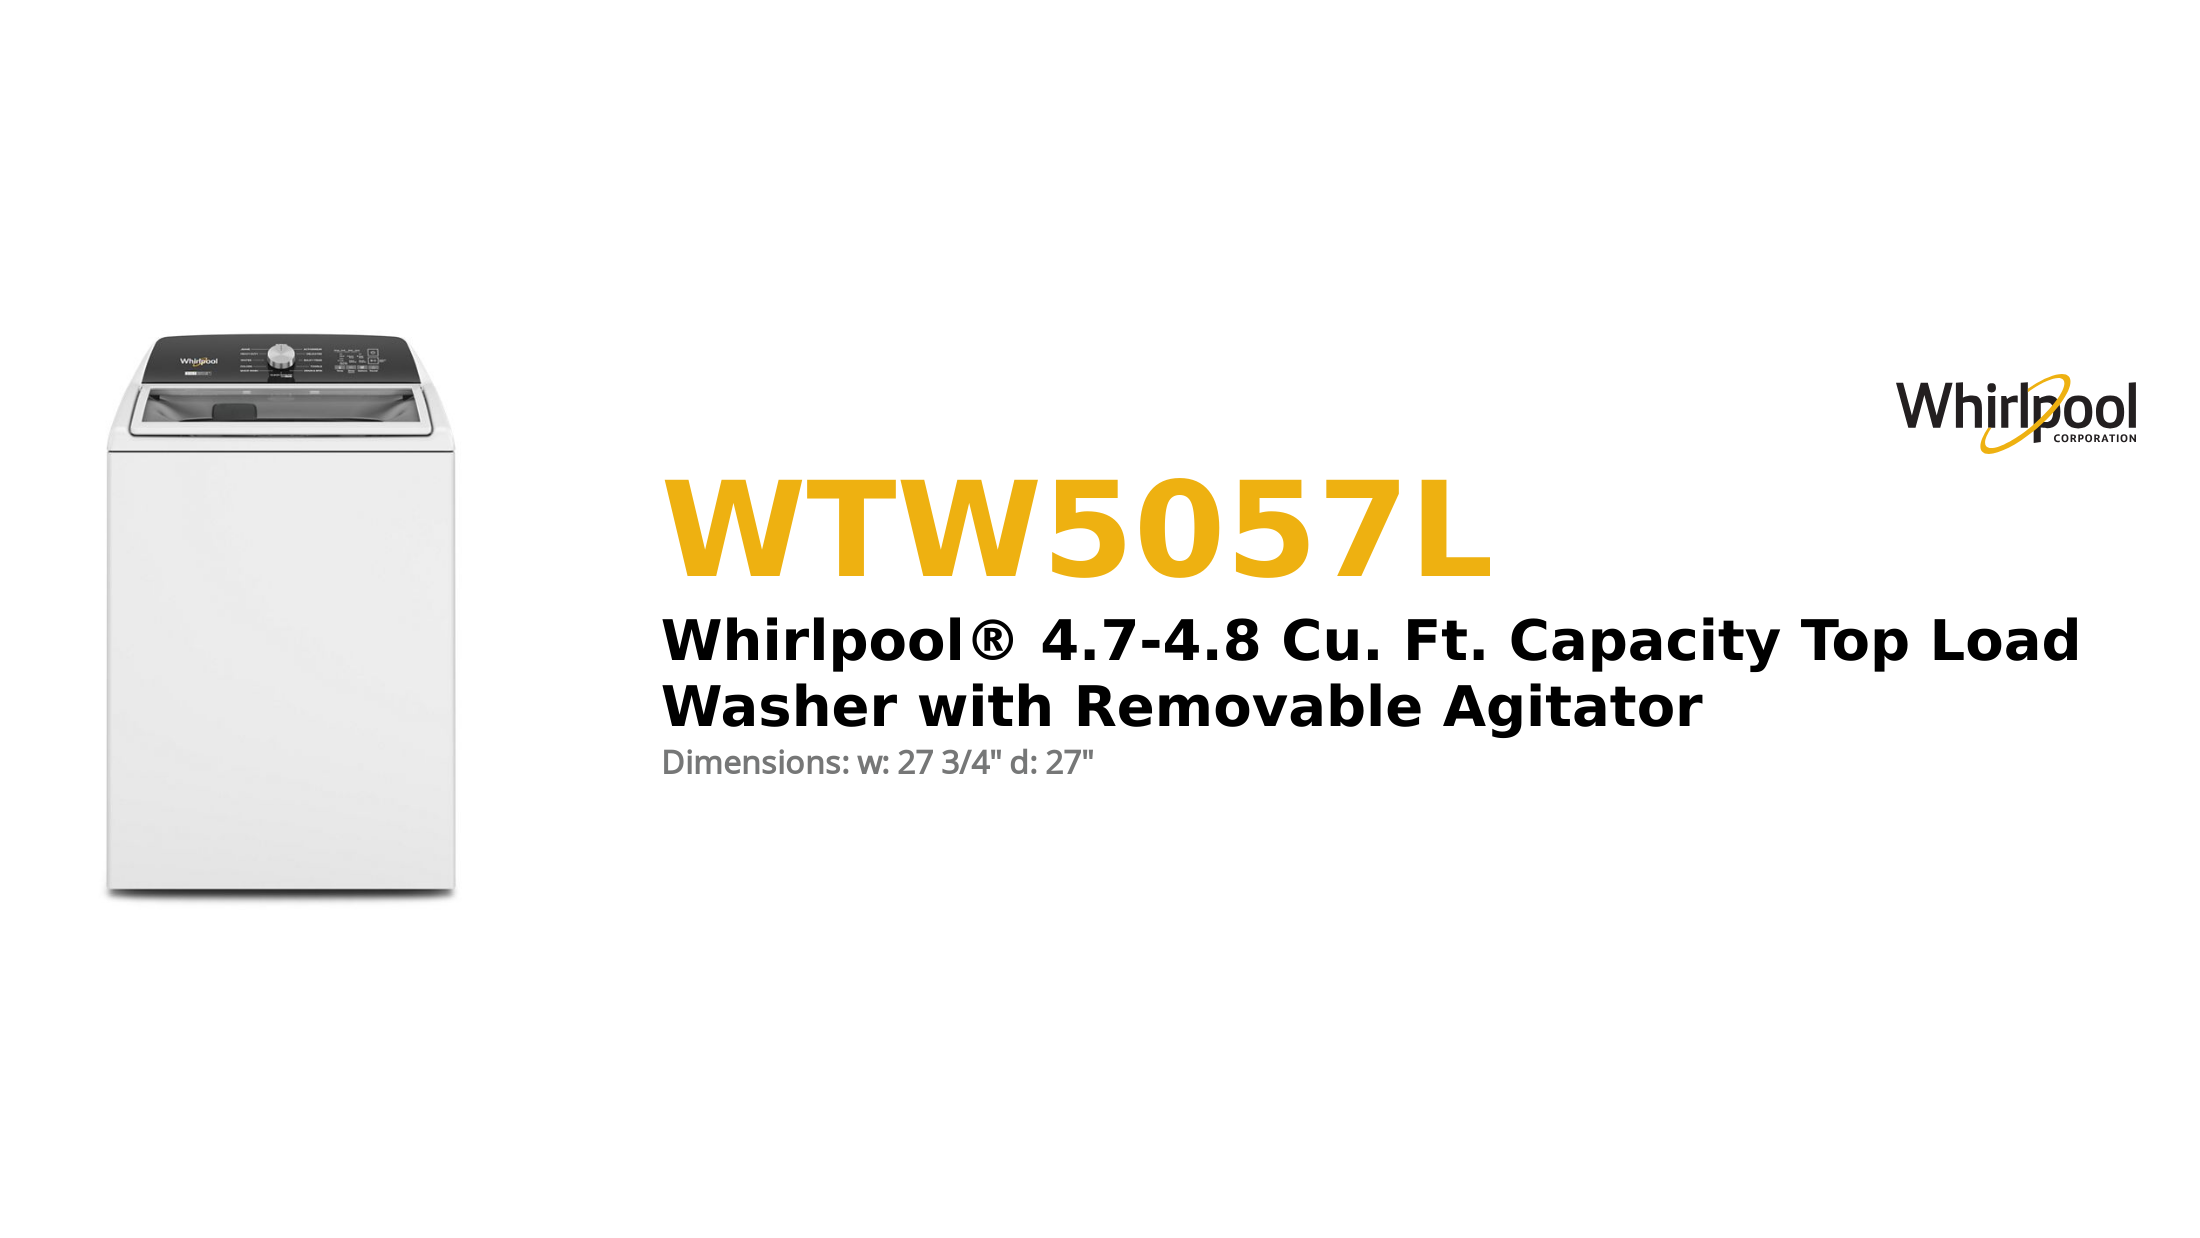 WTW5057L Product Brief